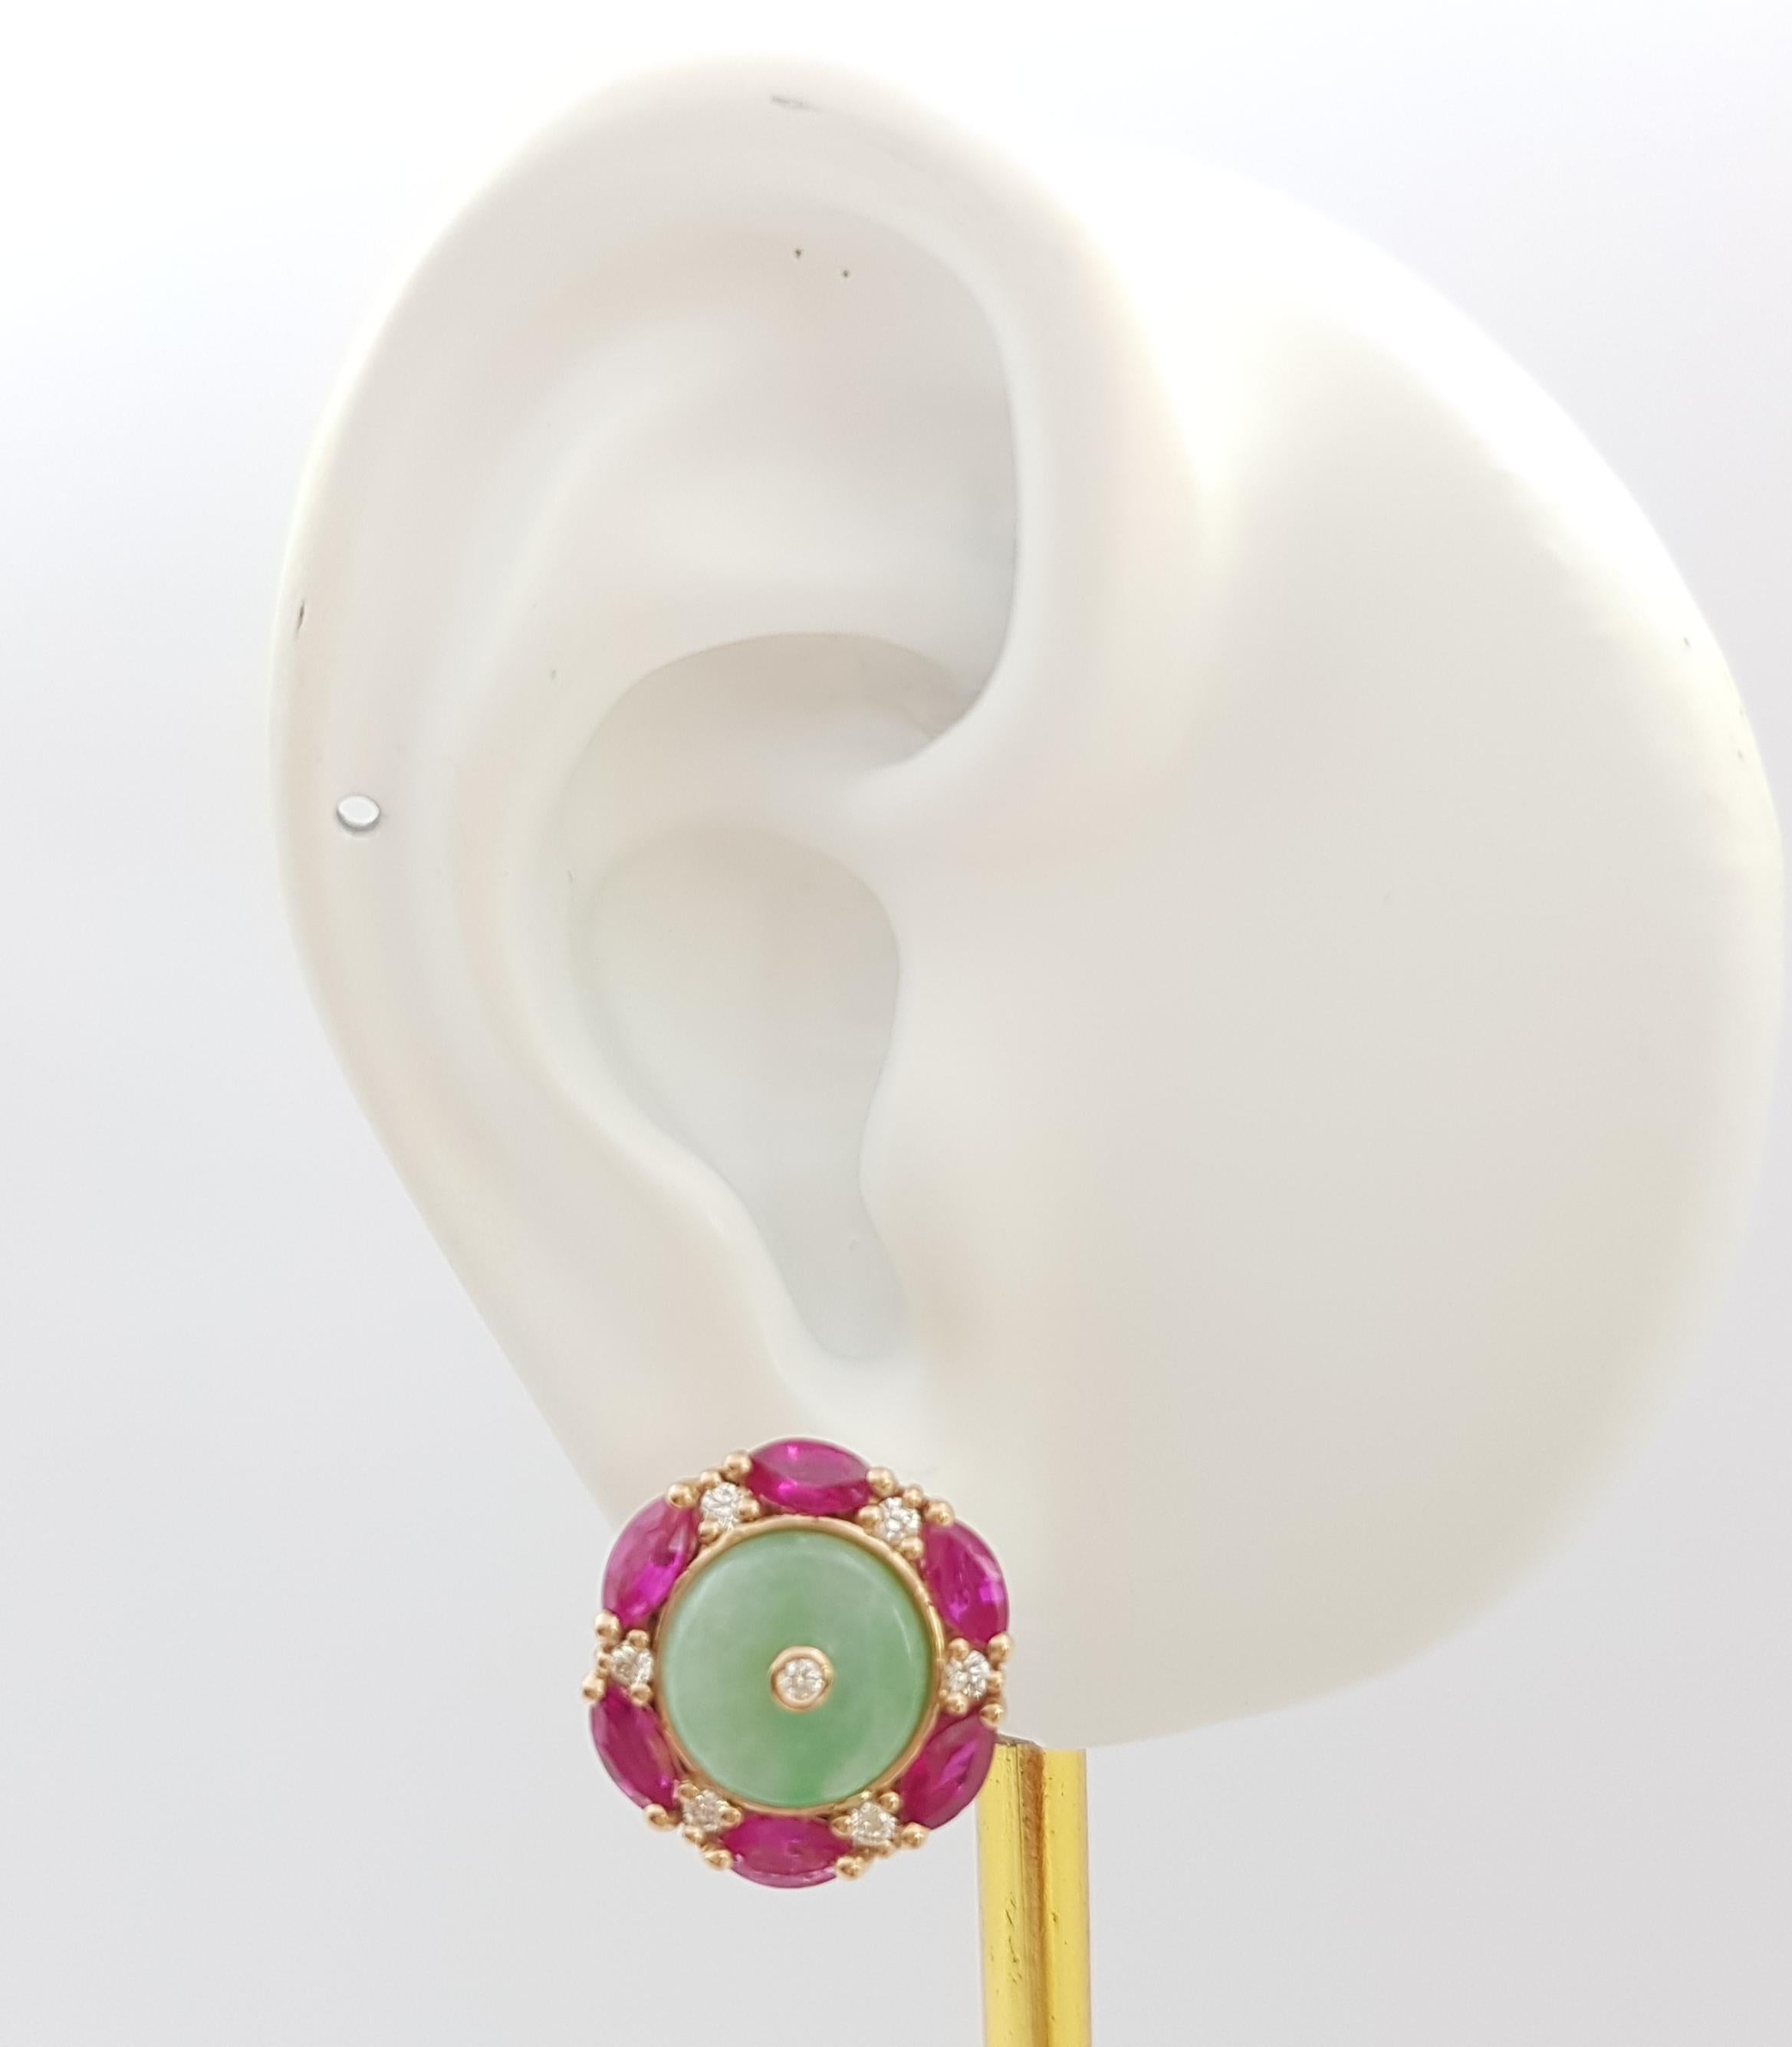 Jade, Ruby 2.40 carats and Diamond 0.20 carat Earrings set in 18K Rose Gold Settings

Width: 1.6 cm 
Length: 1.6 cm
Total Weight: 10.36 grams

